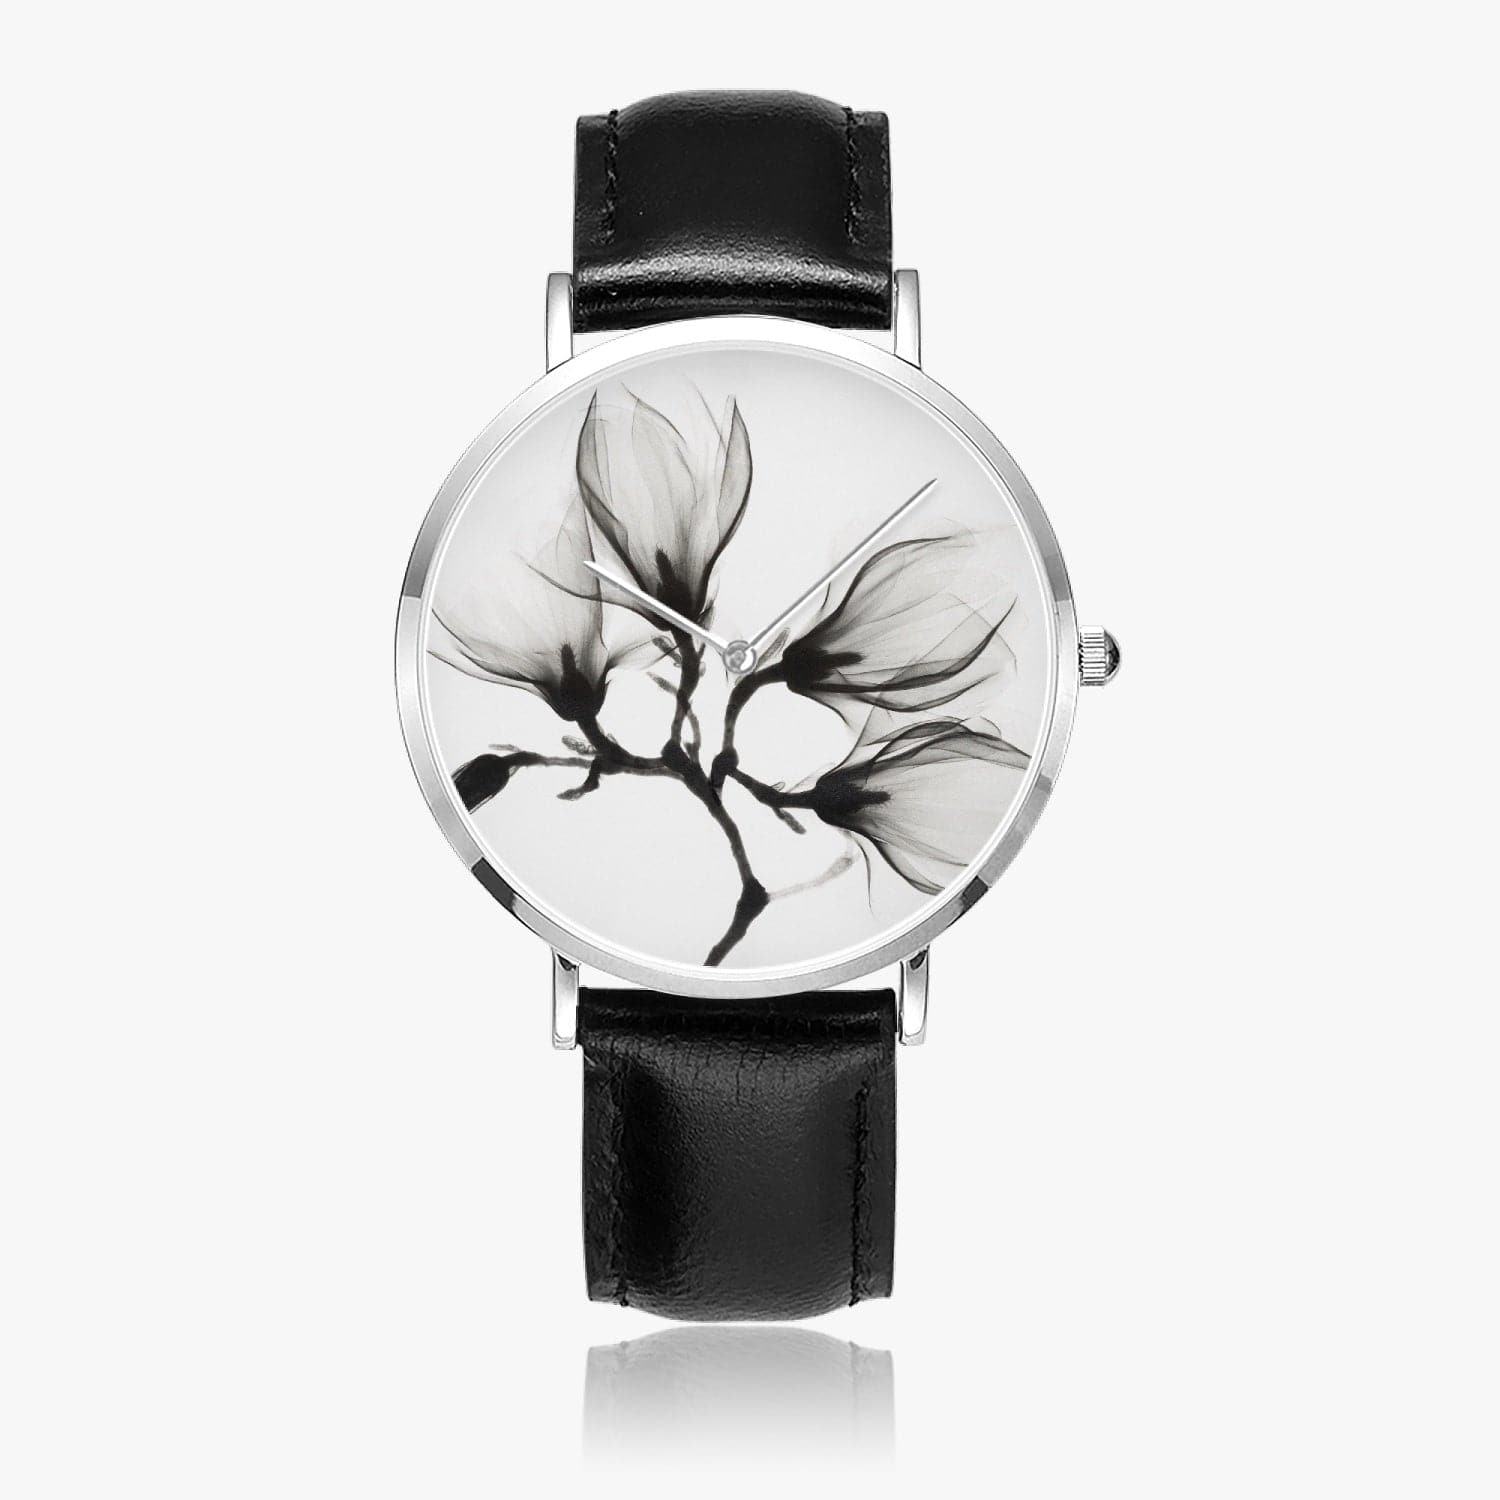 White magnolia  Hot Selling Ultra-Thin Leather Strap Quartz Watch (Silver), By Sensus Studio Design